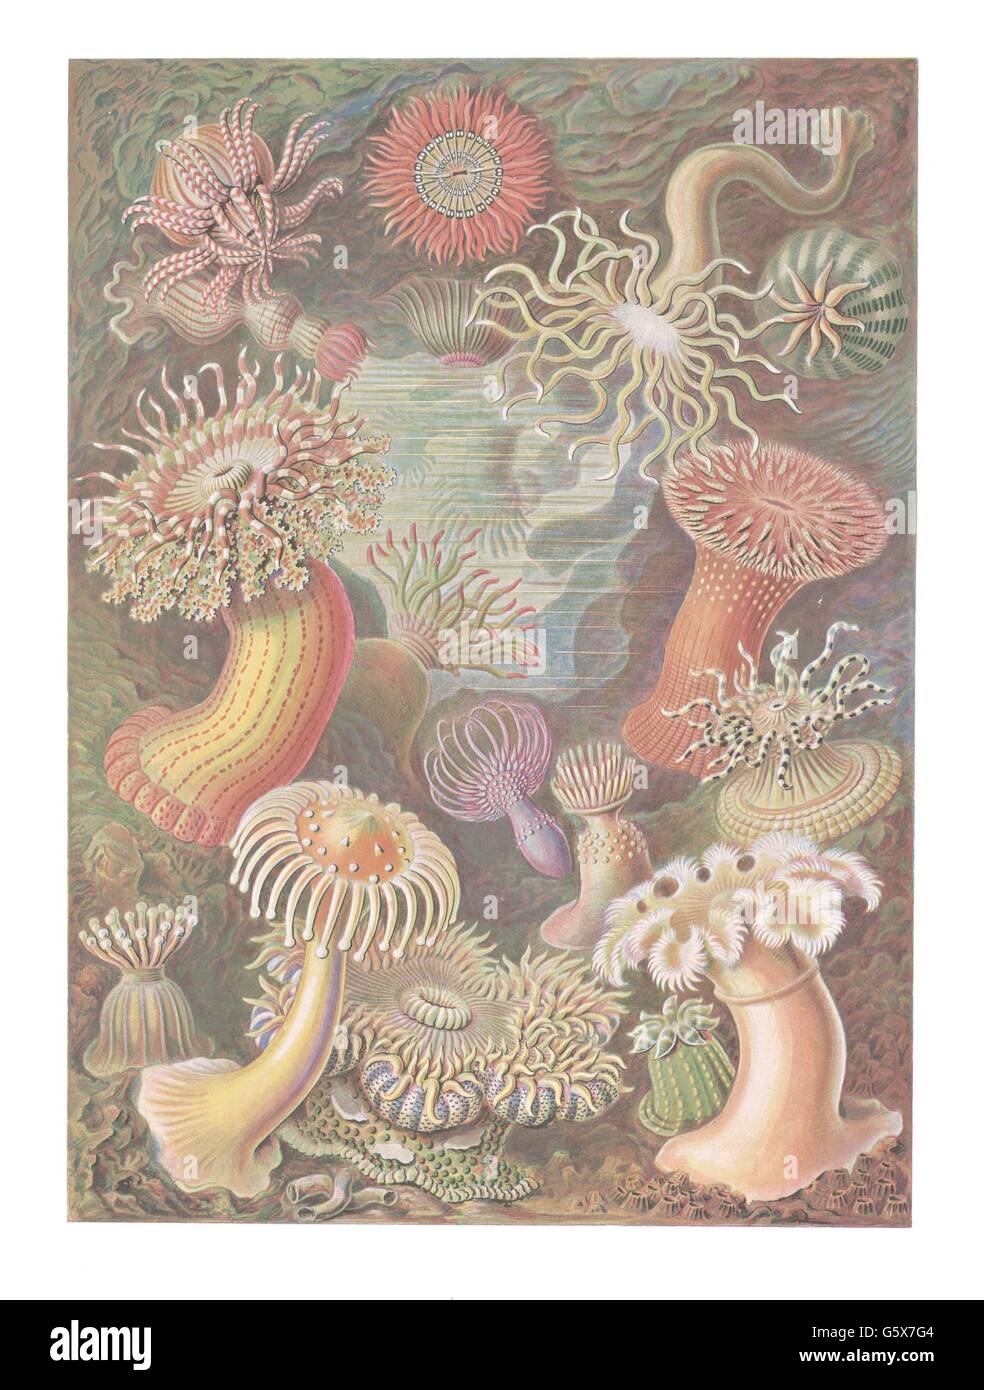 zoologie / Tiere, Anthozoa, Seeanemonen (Actinaria), Farblithographie, aus: Ernst Haeckel, 'Kunstformen der Natur', Leipzig - Wien, 1899 - 1904, Additional-Rights-Clearences-not available Stockfoto